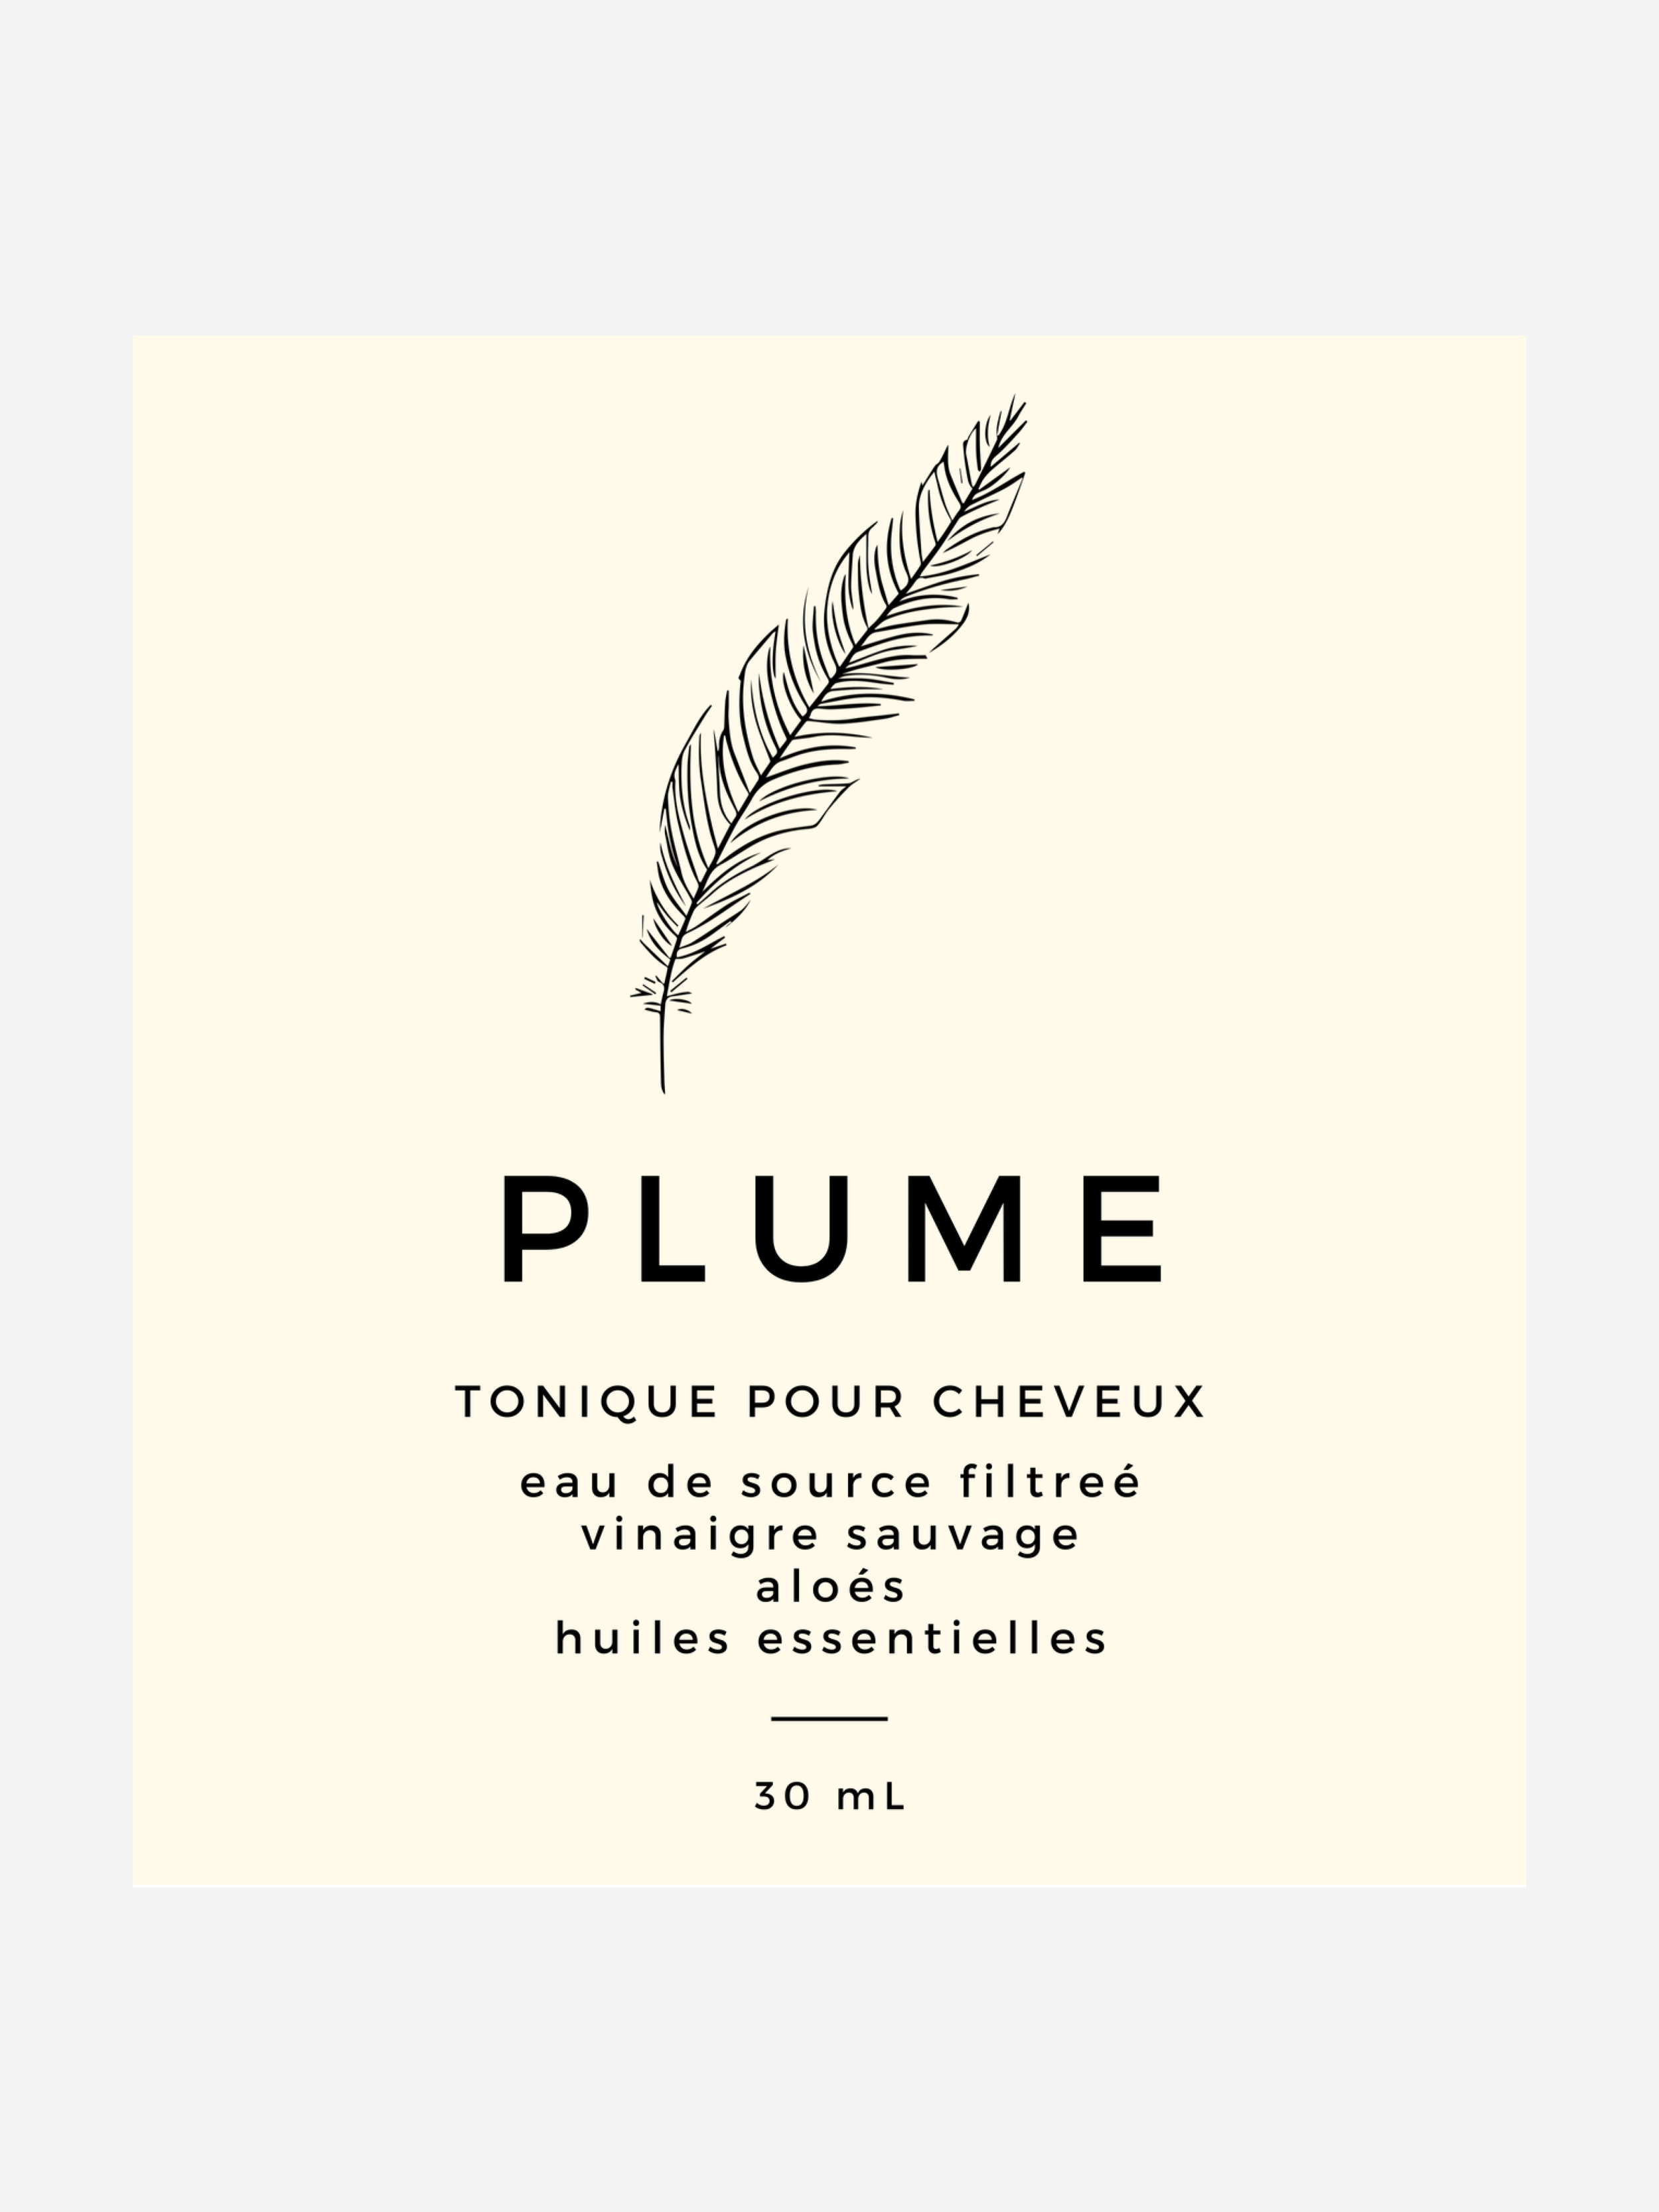 Plume hair tonic